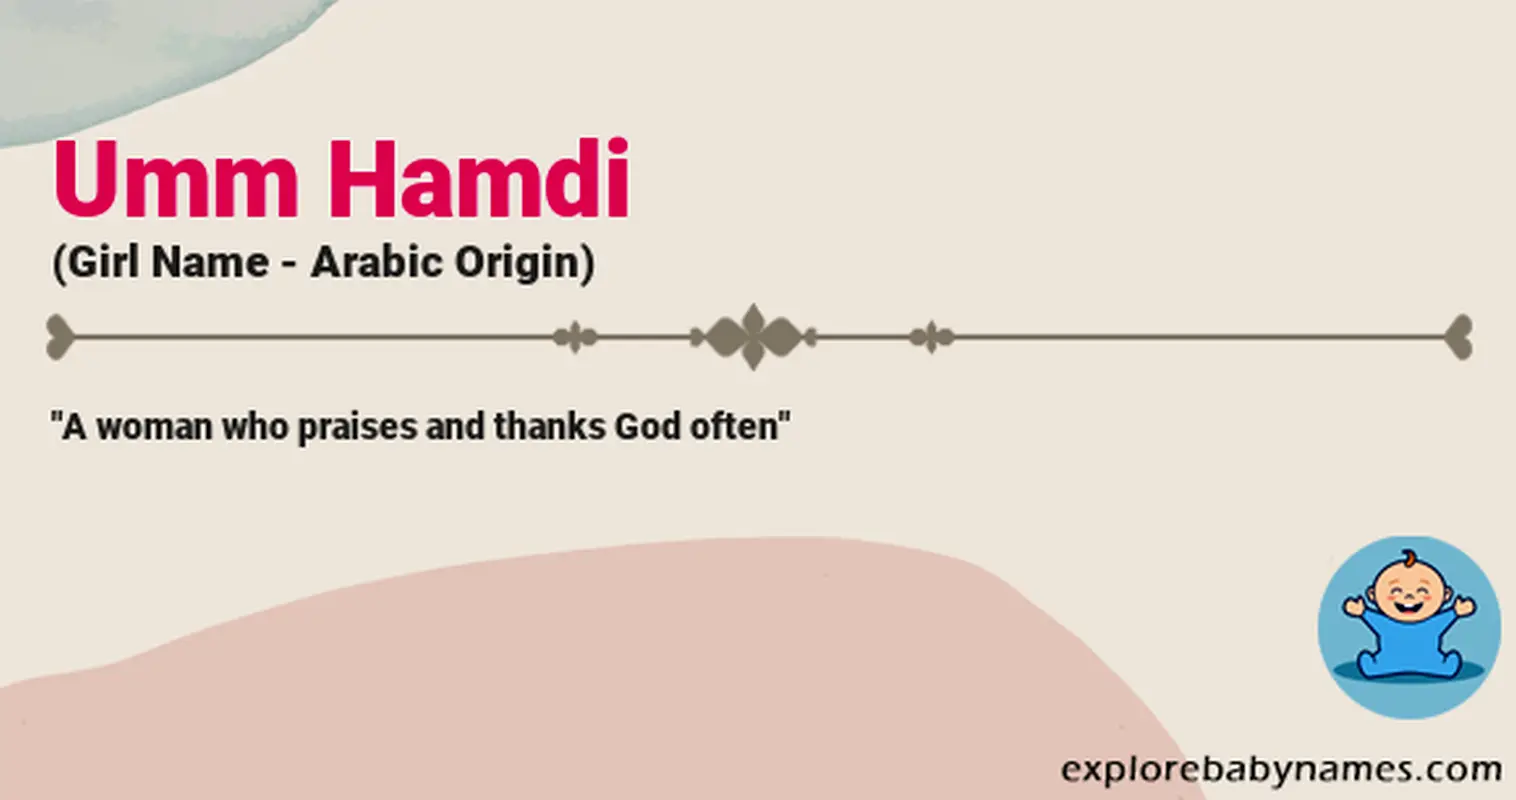 Meaning of Umm Hamdi